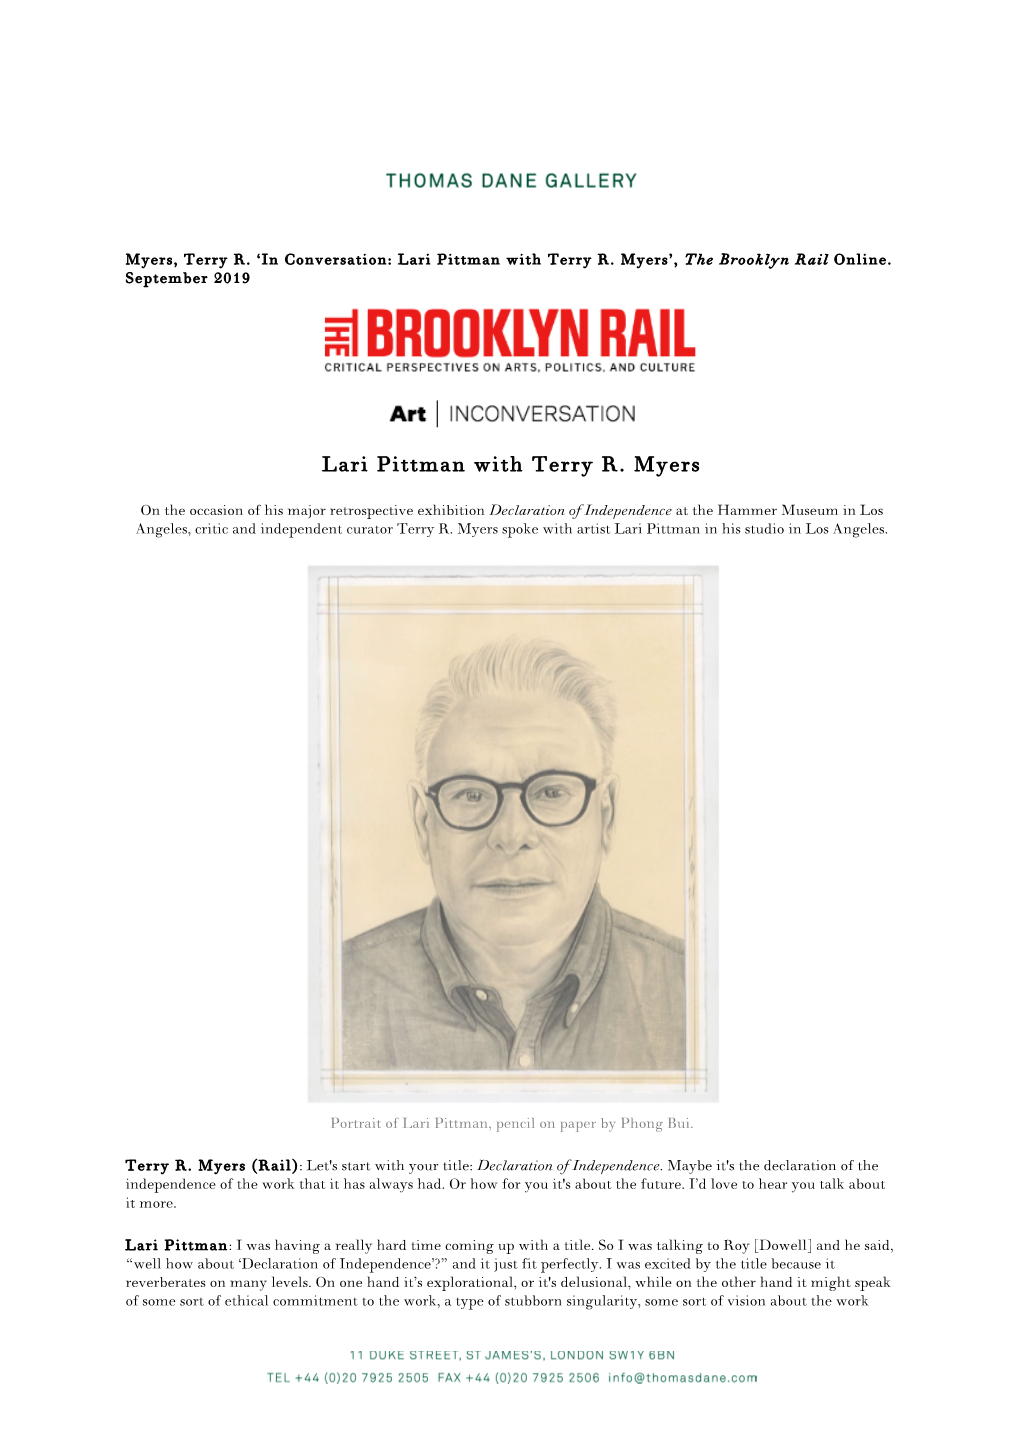 Lari Pittman with Terry R. Myers’, the Brooklyn Rail Online